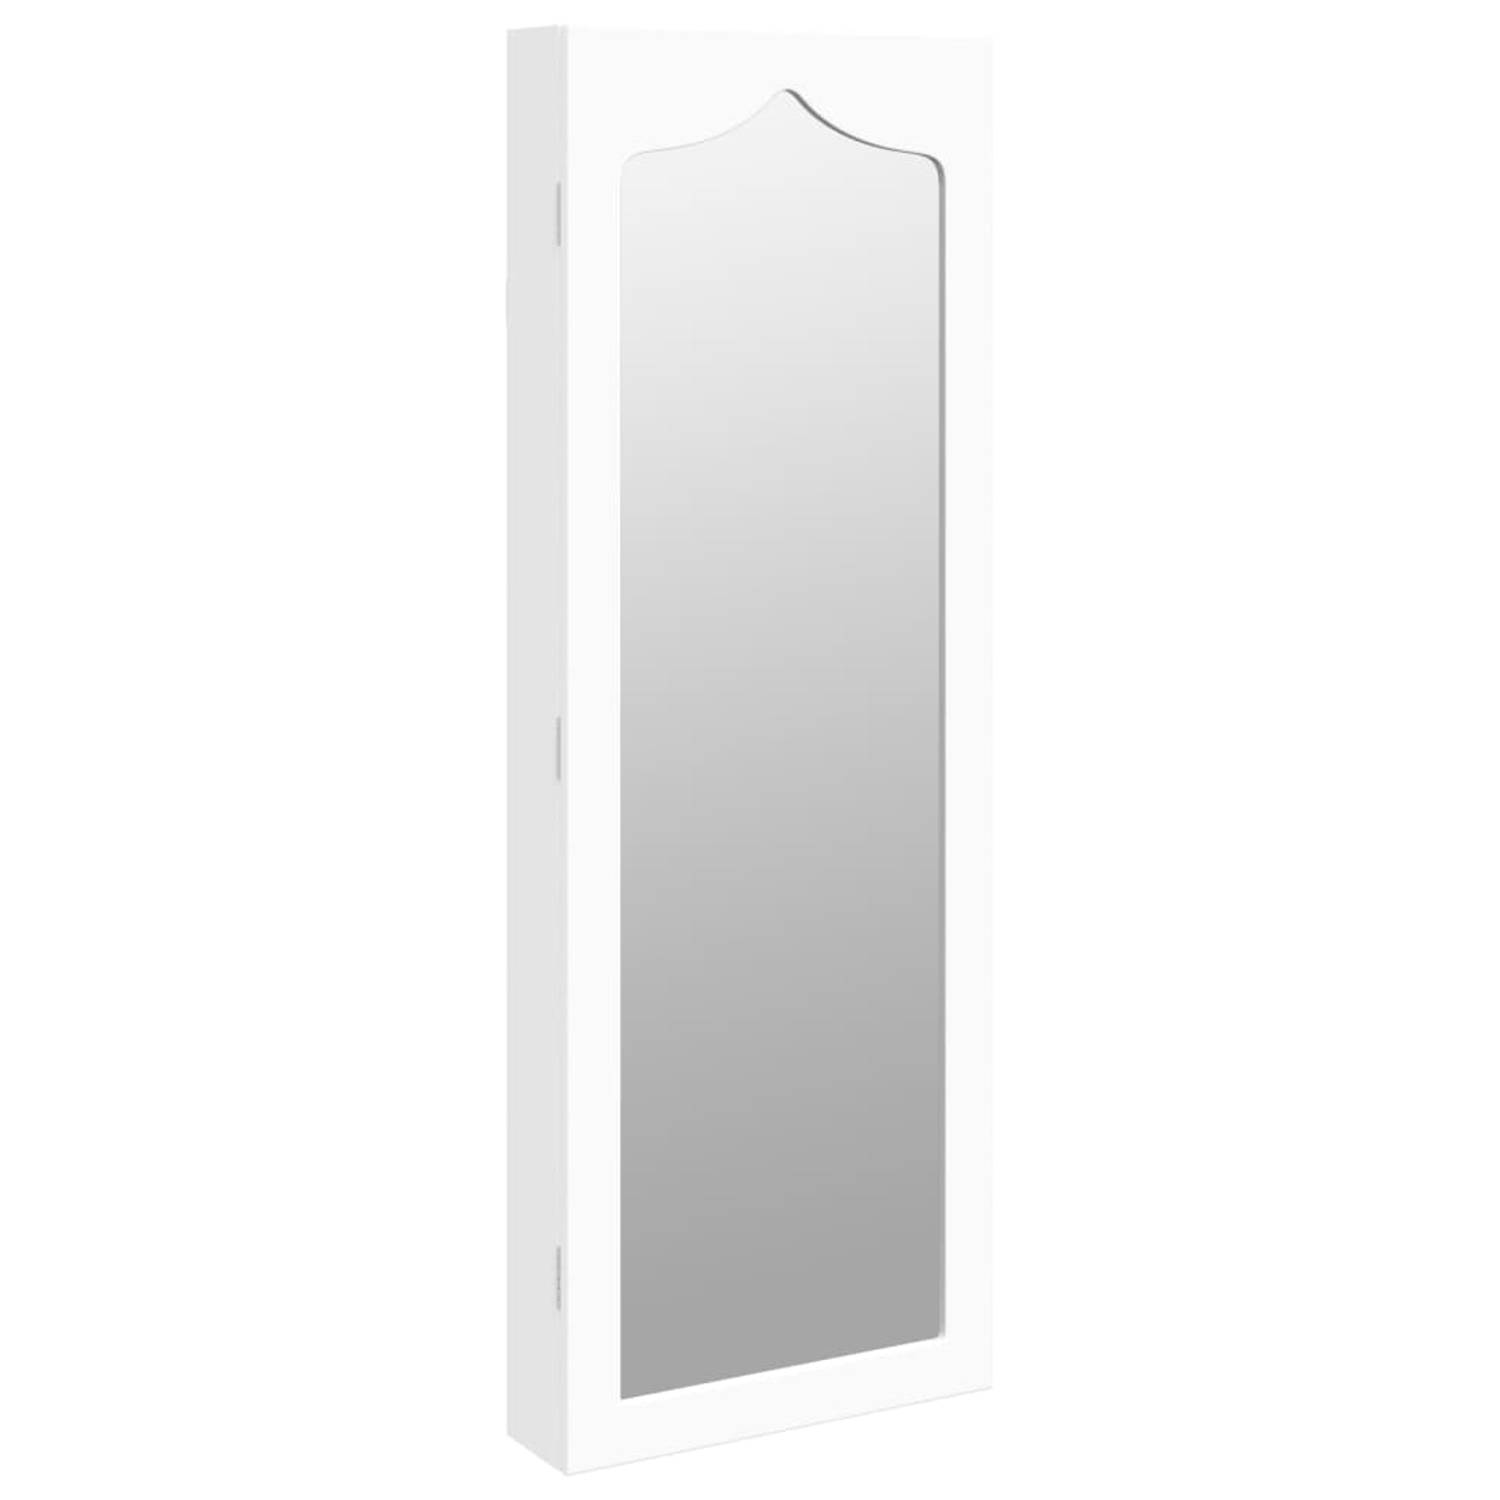 The Living Store Sieradenkast met spiegel wandgemonteerd 37-5x10x106 cm wit - Spiegel